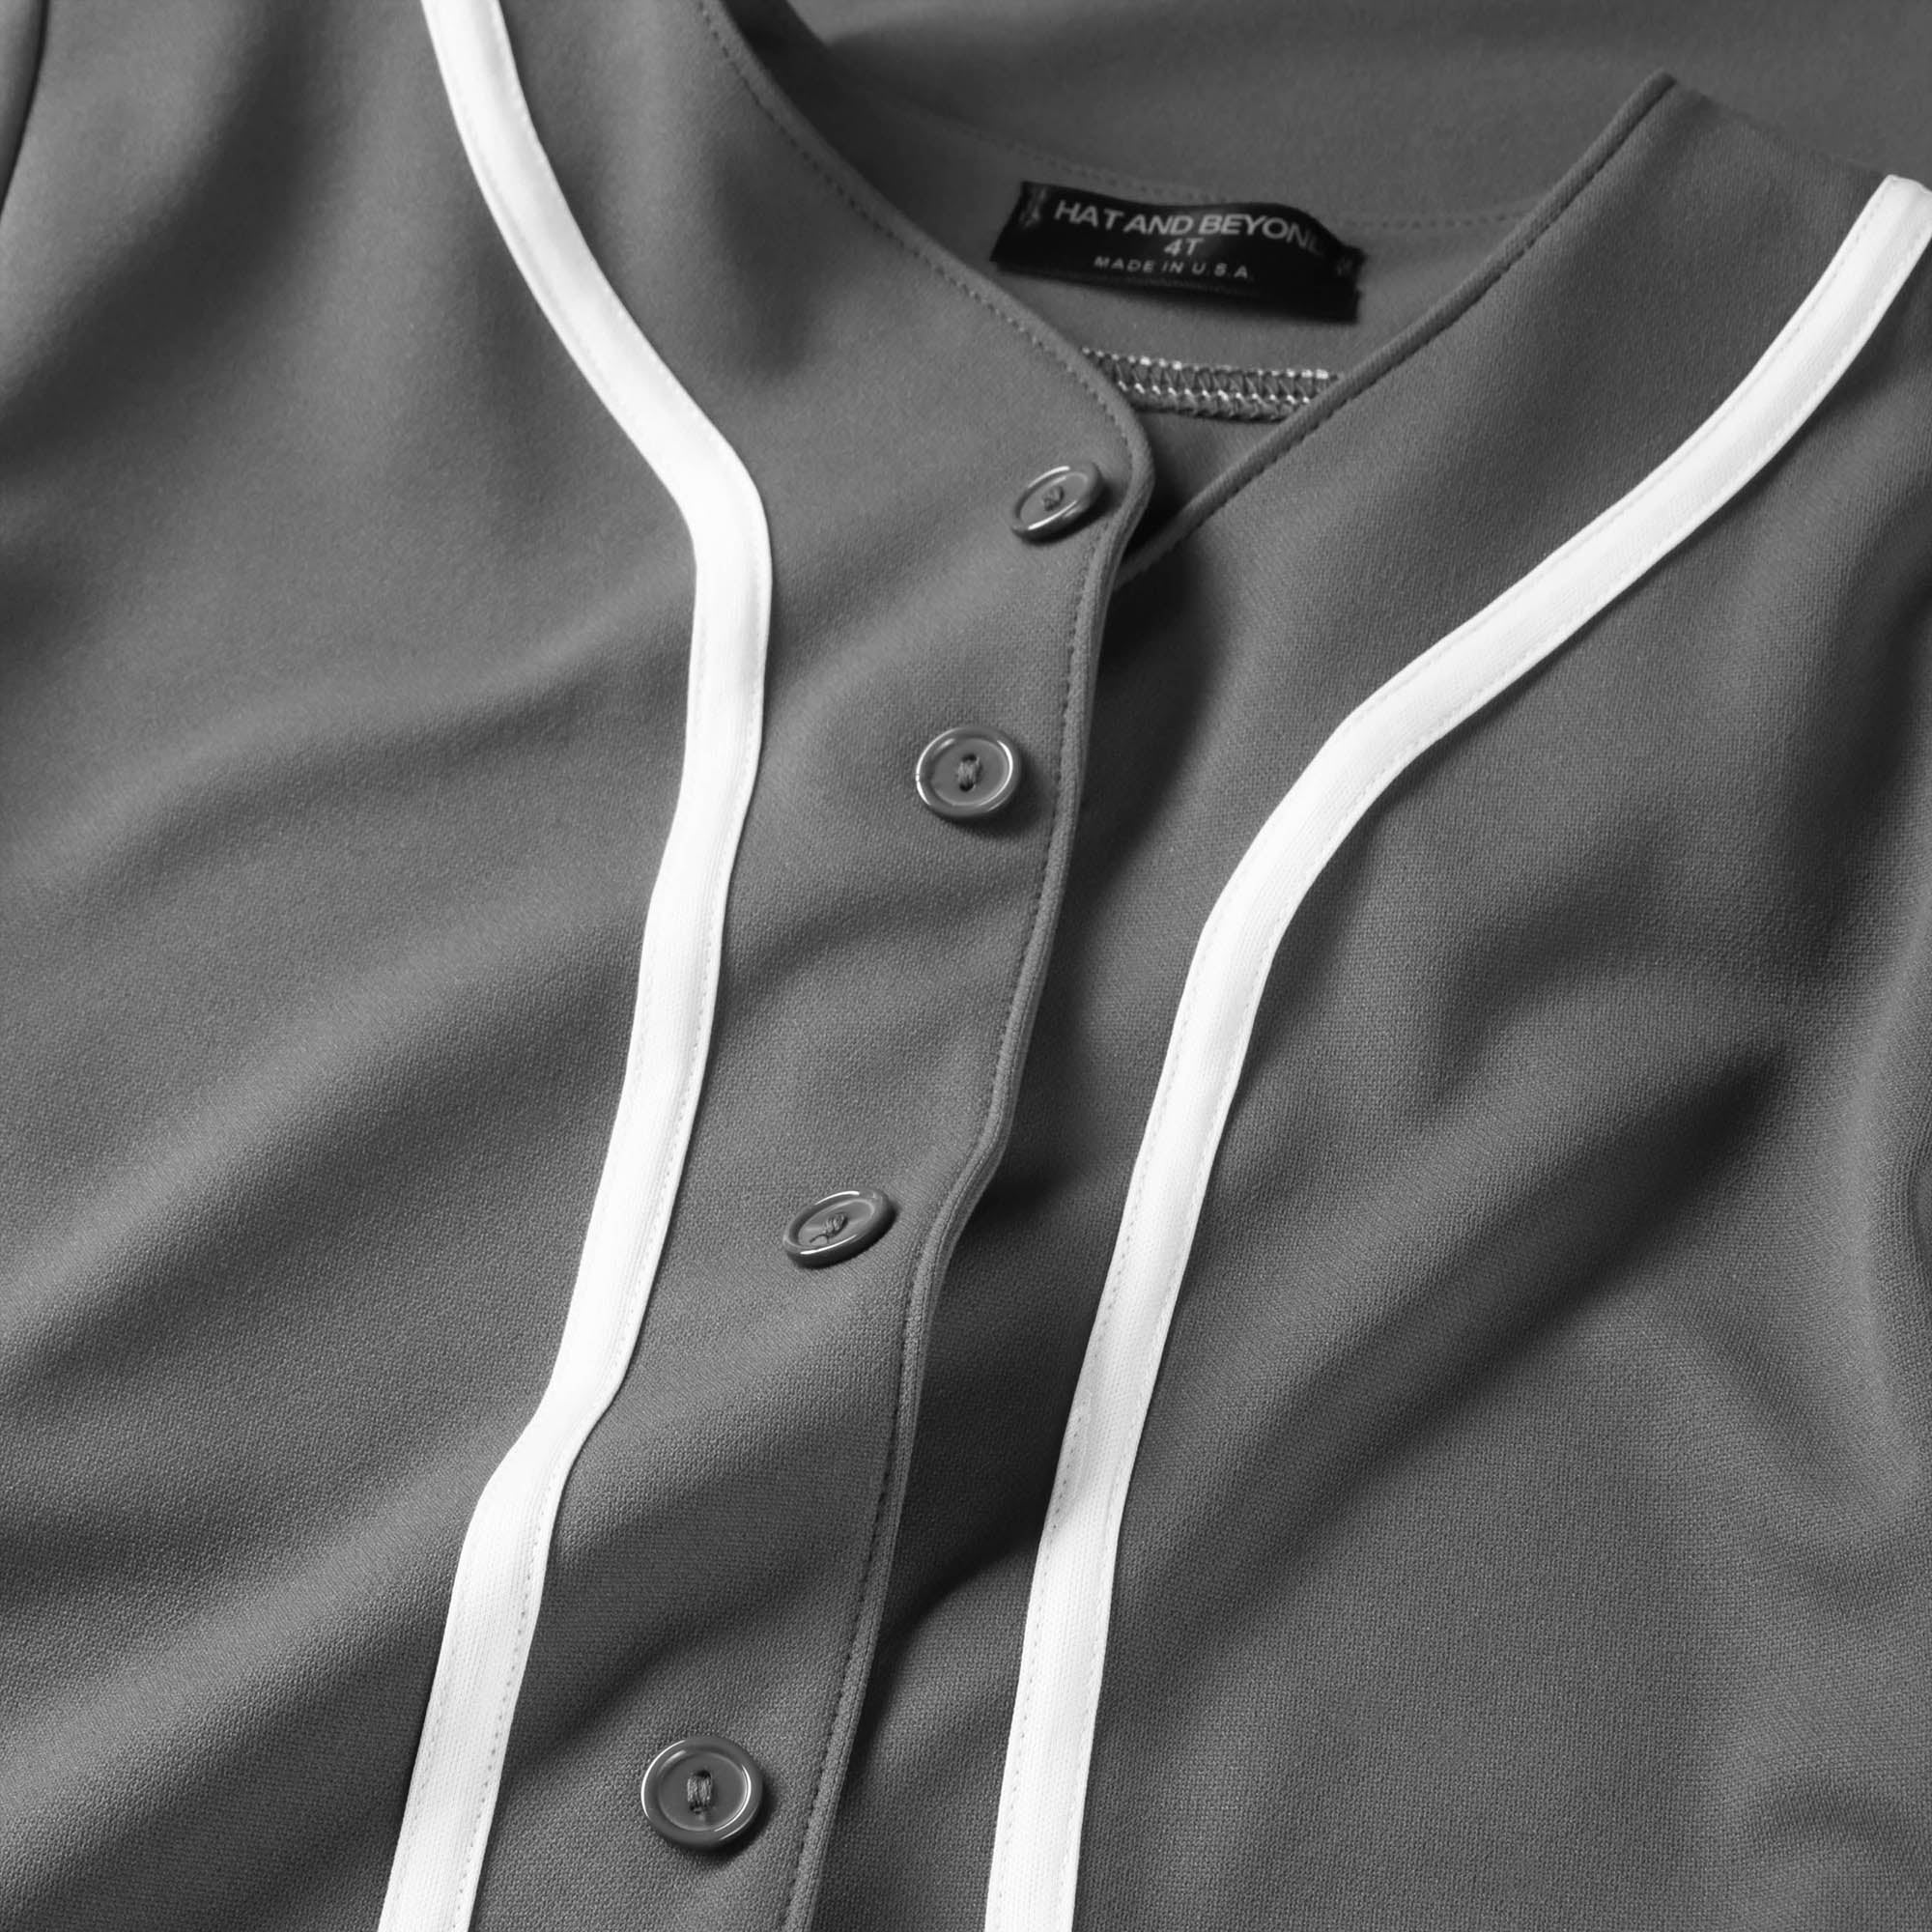  TOPTIE Boys Baseball Jersey, Kids Button Down Jersey T-Shirt  Softball-Black White-12 Months : Clothing, Shoes & Jewelry